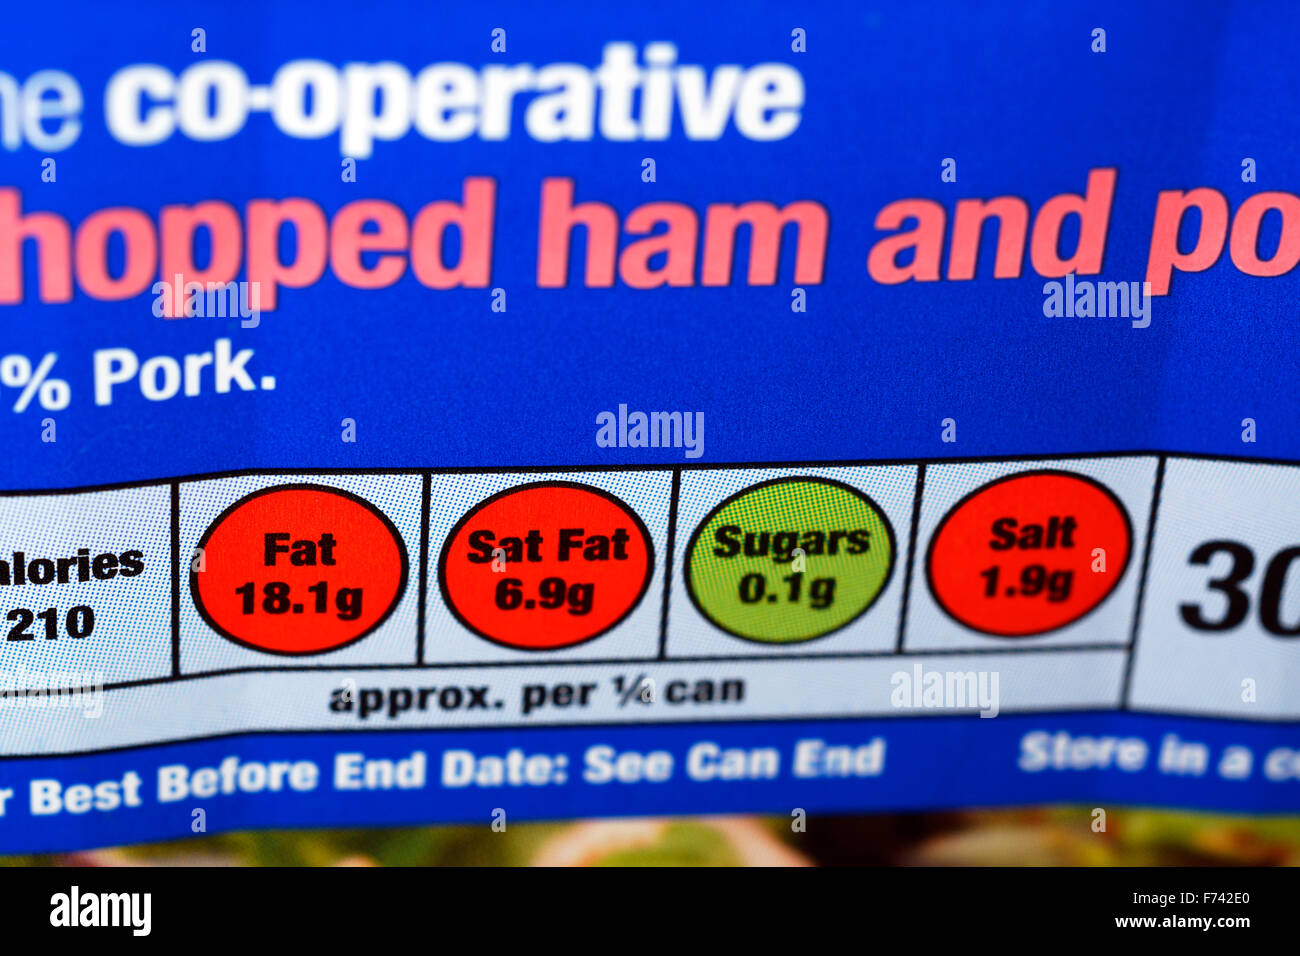 A tin of Co-operative chopped ham & pork showing traffic lights symbols Stock Photo